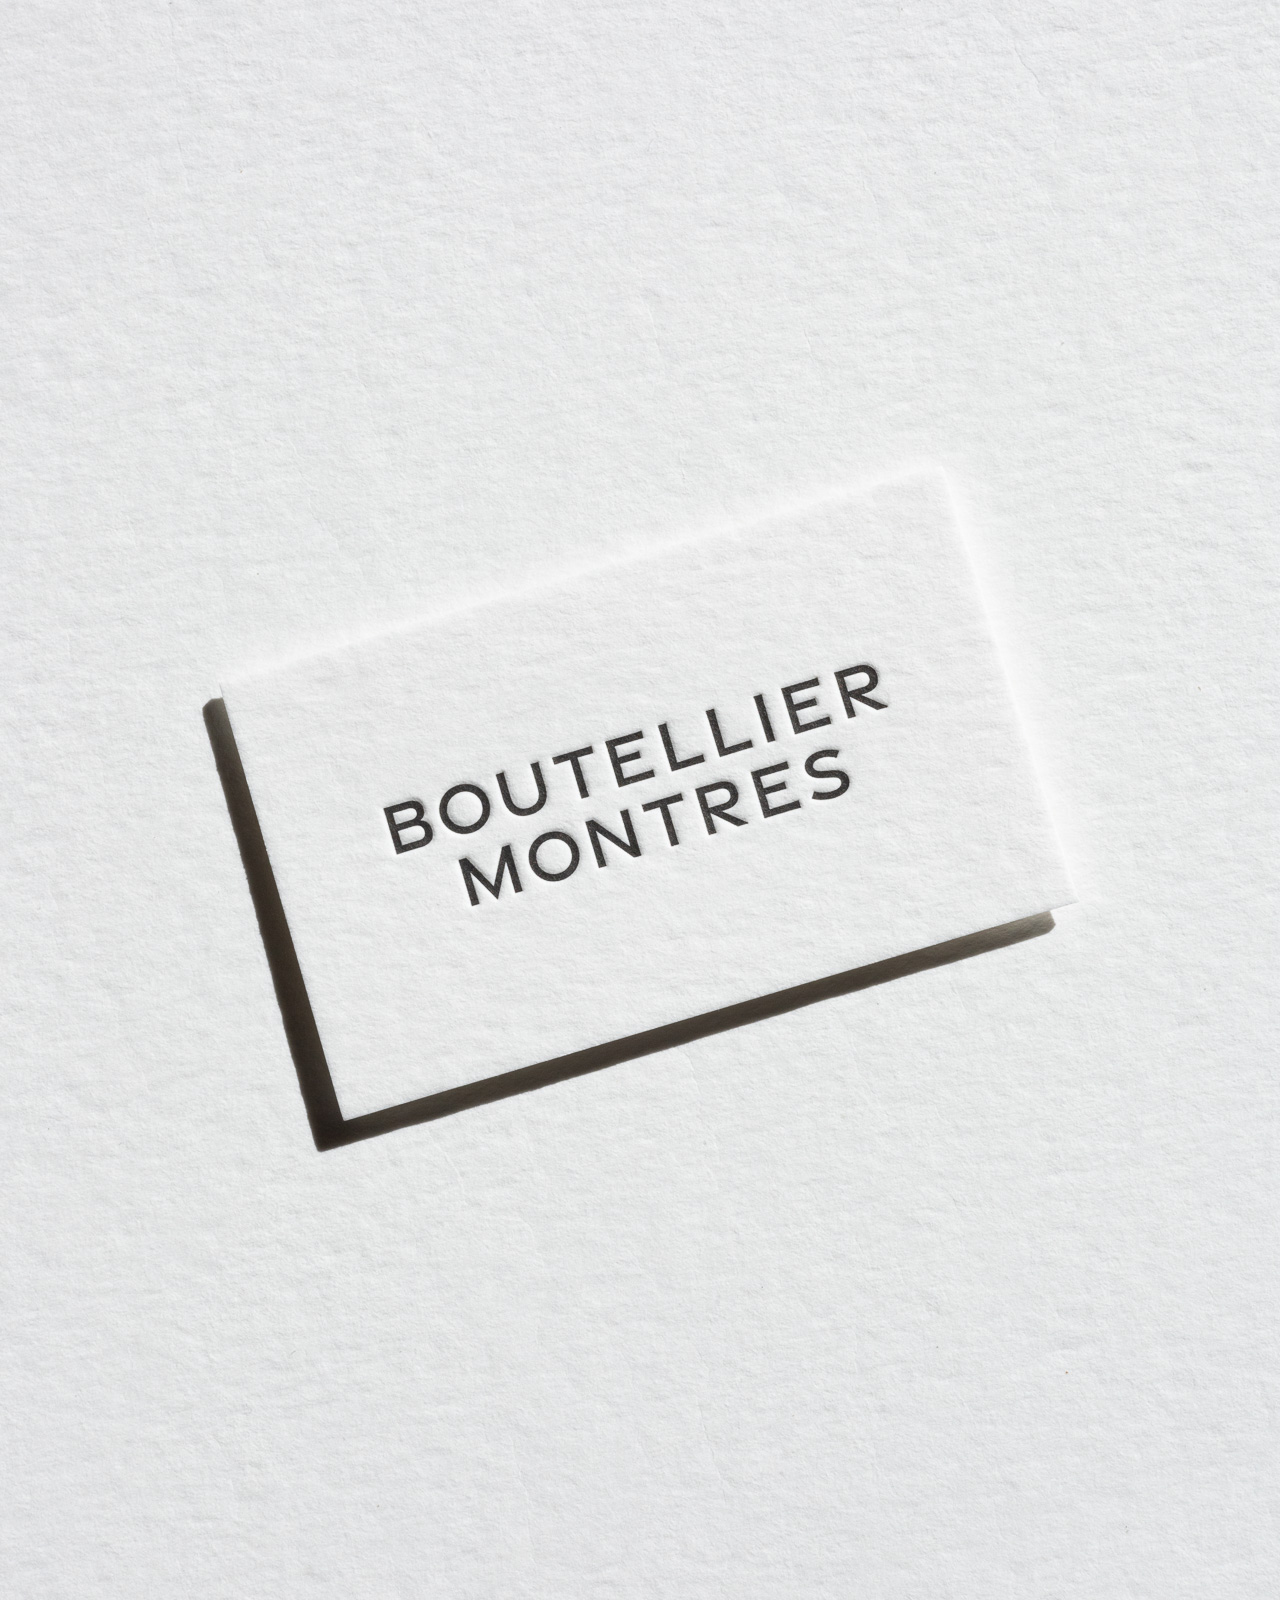 Boutellier-Montres-Studio-Round-letterpress-4